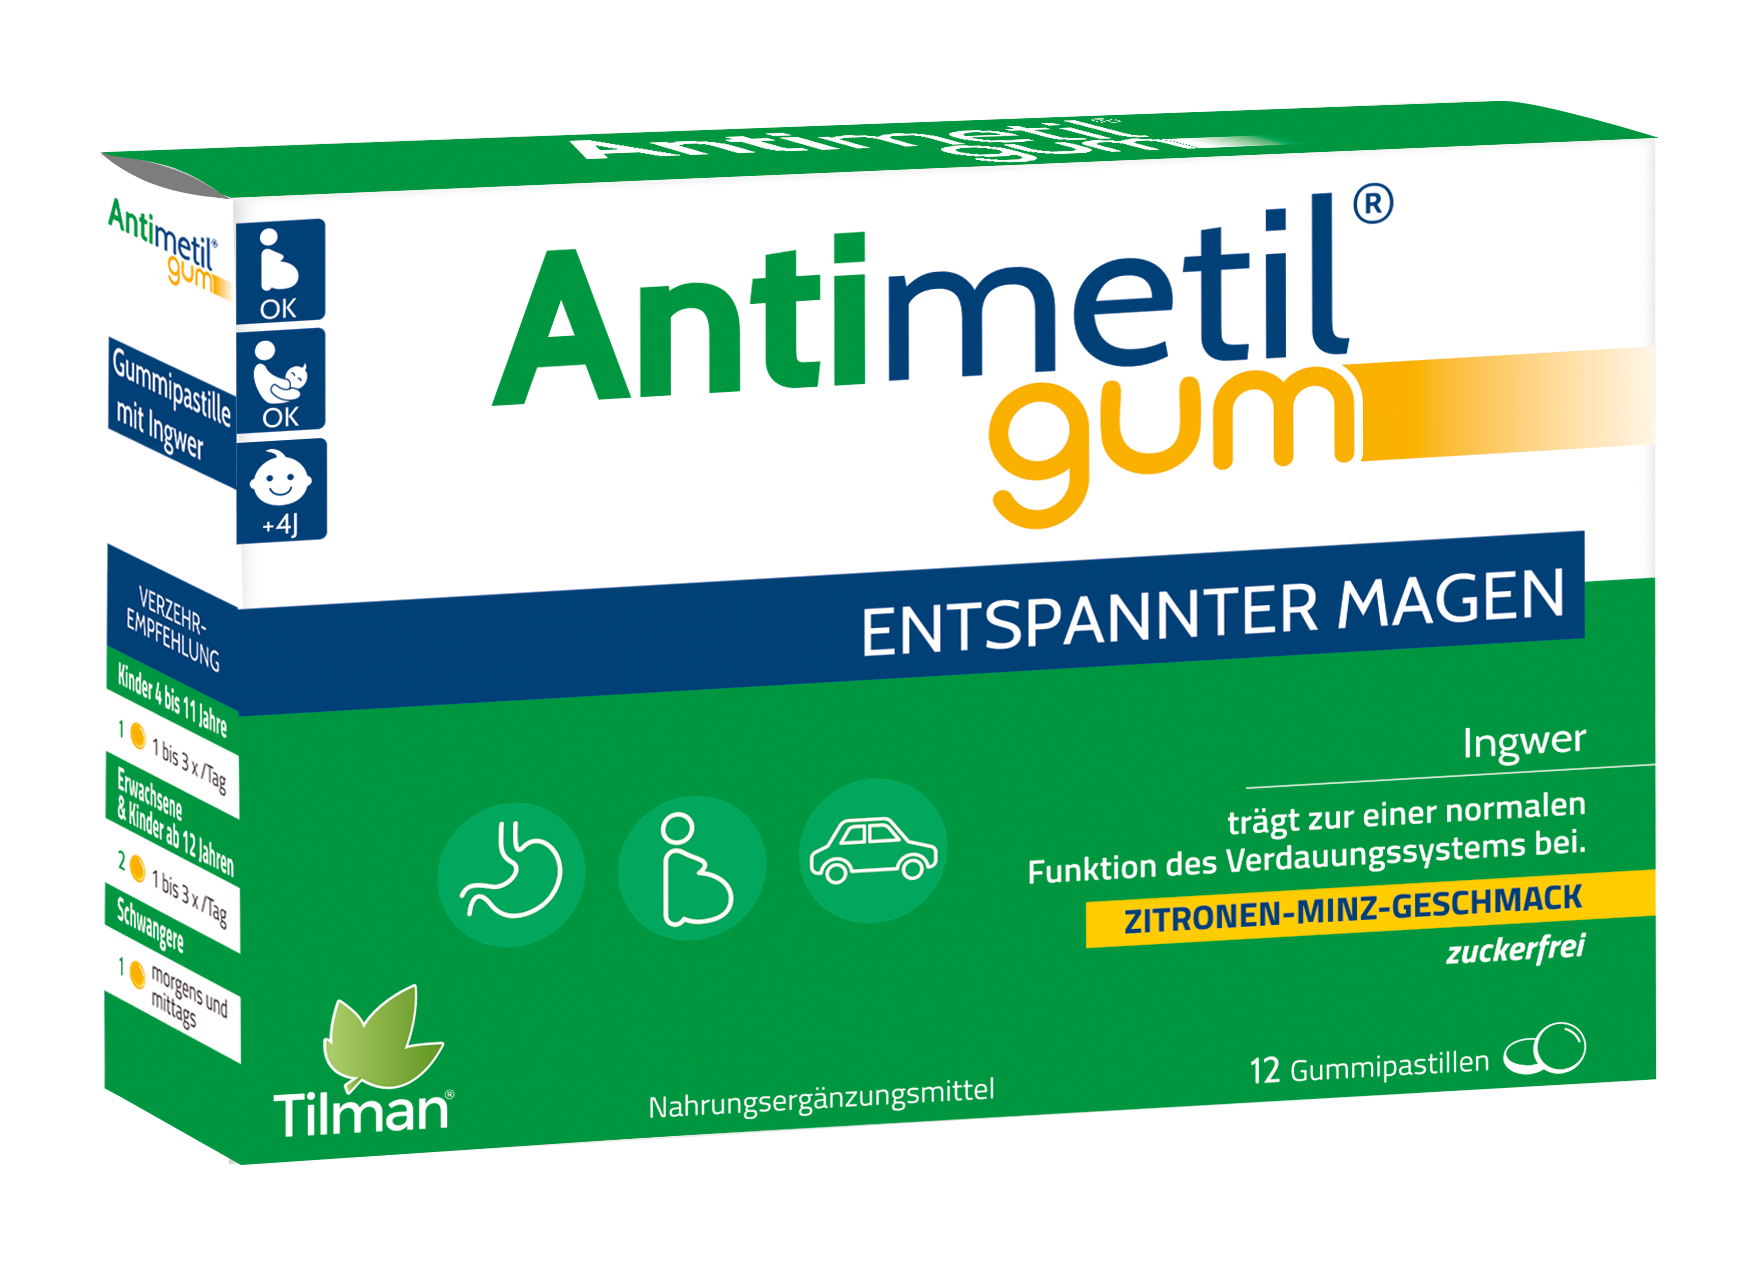 Antimetil gum